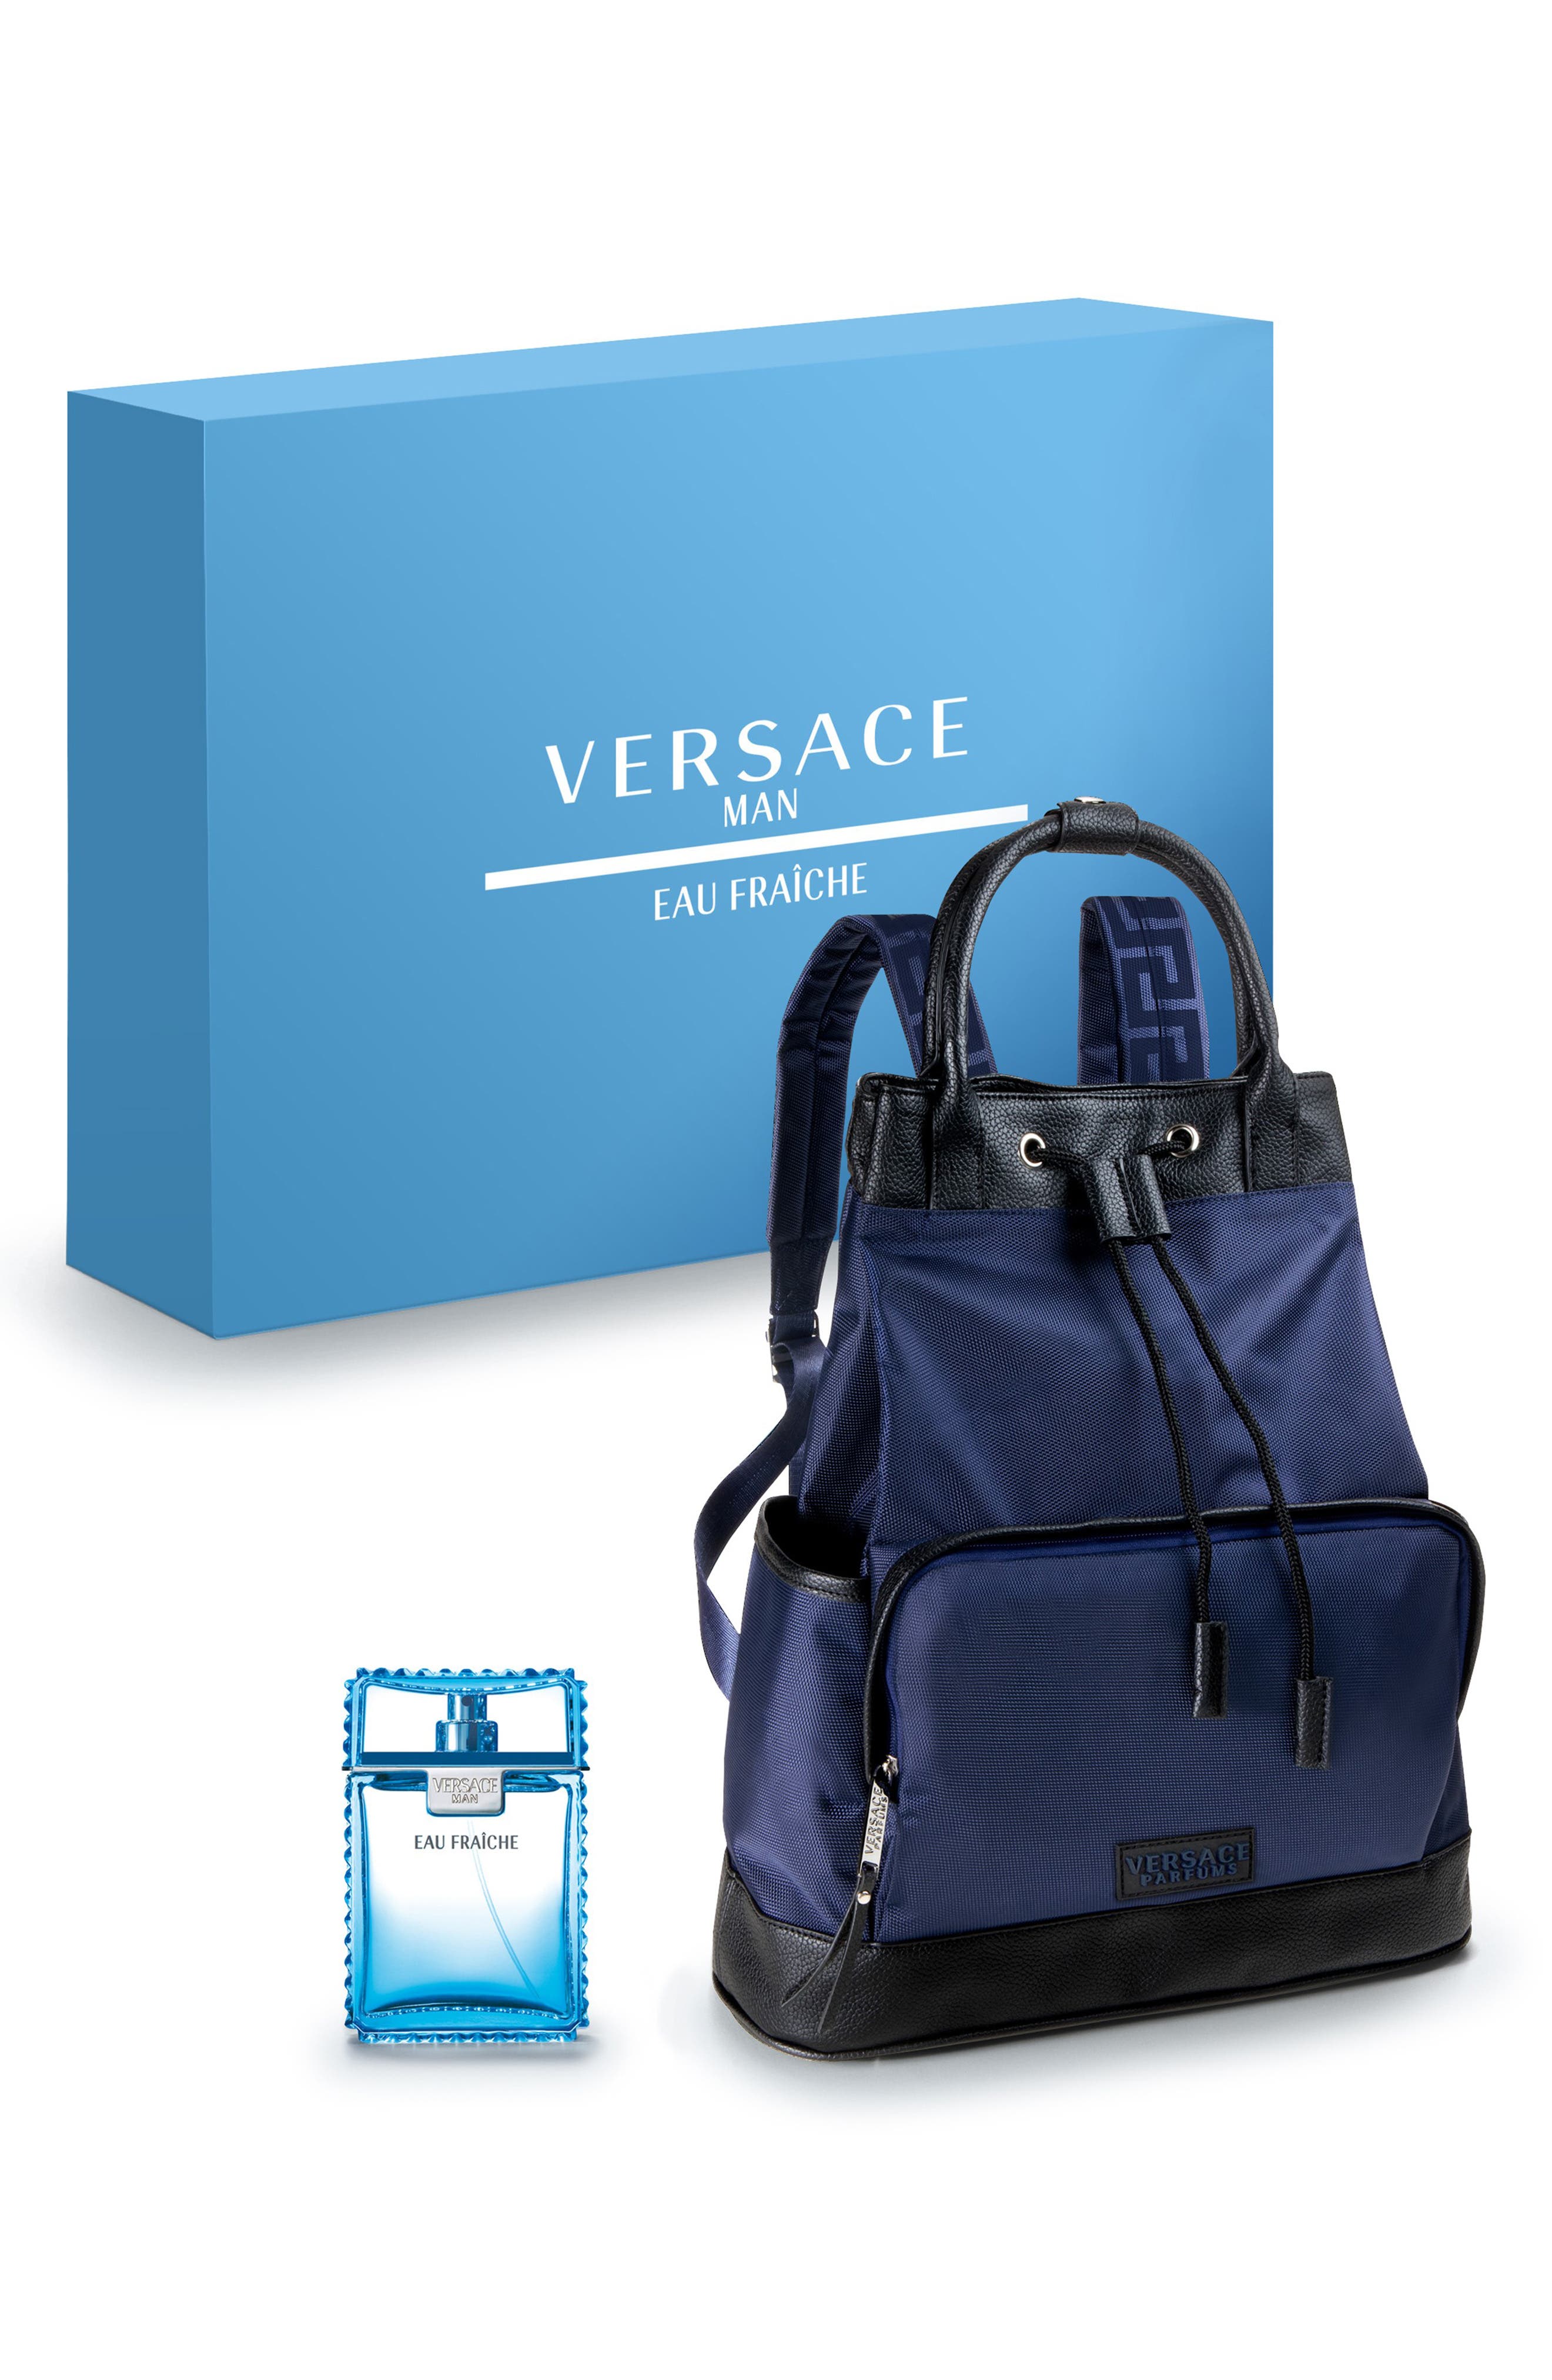 versace bag and cologne